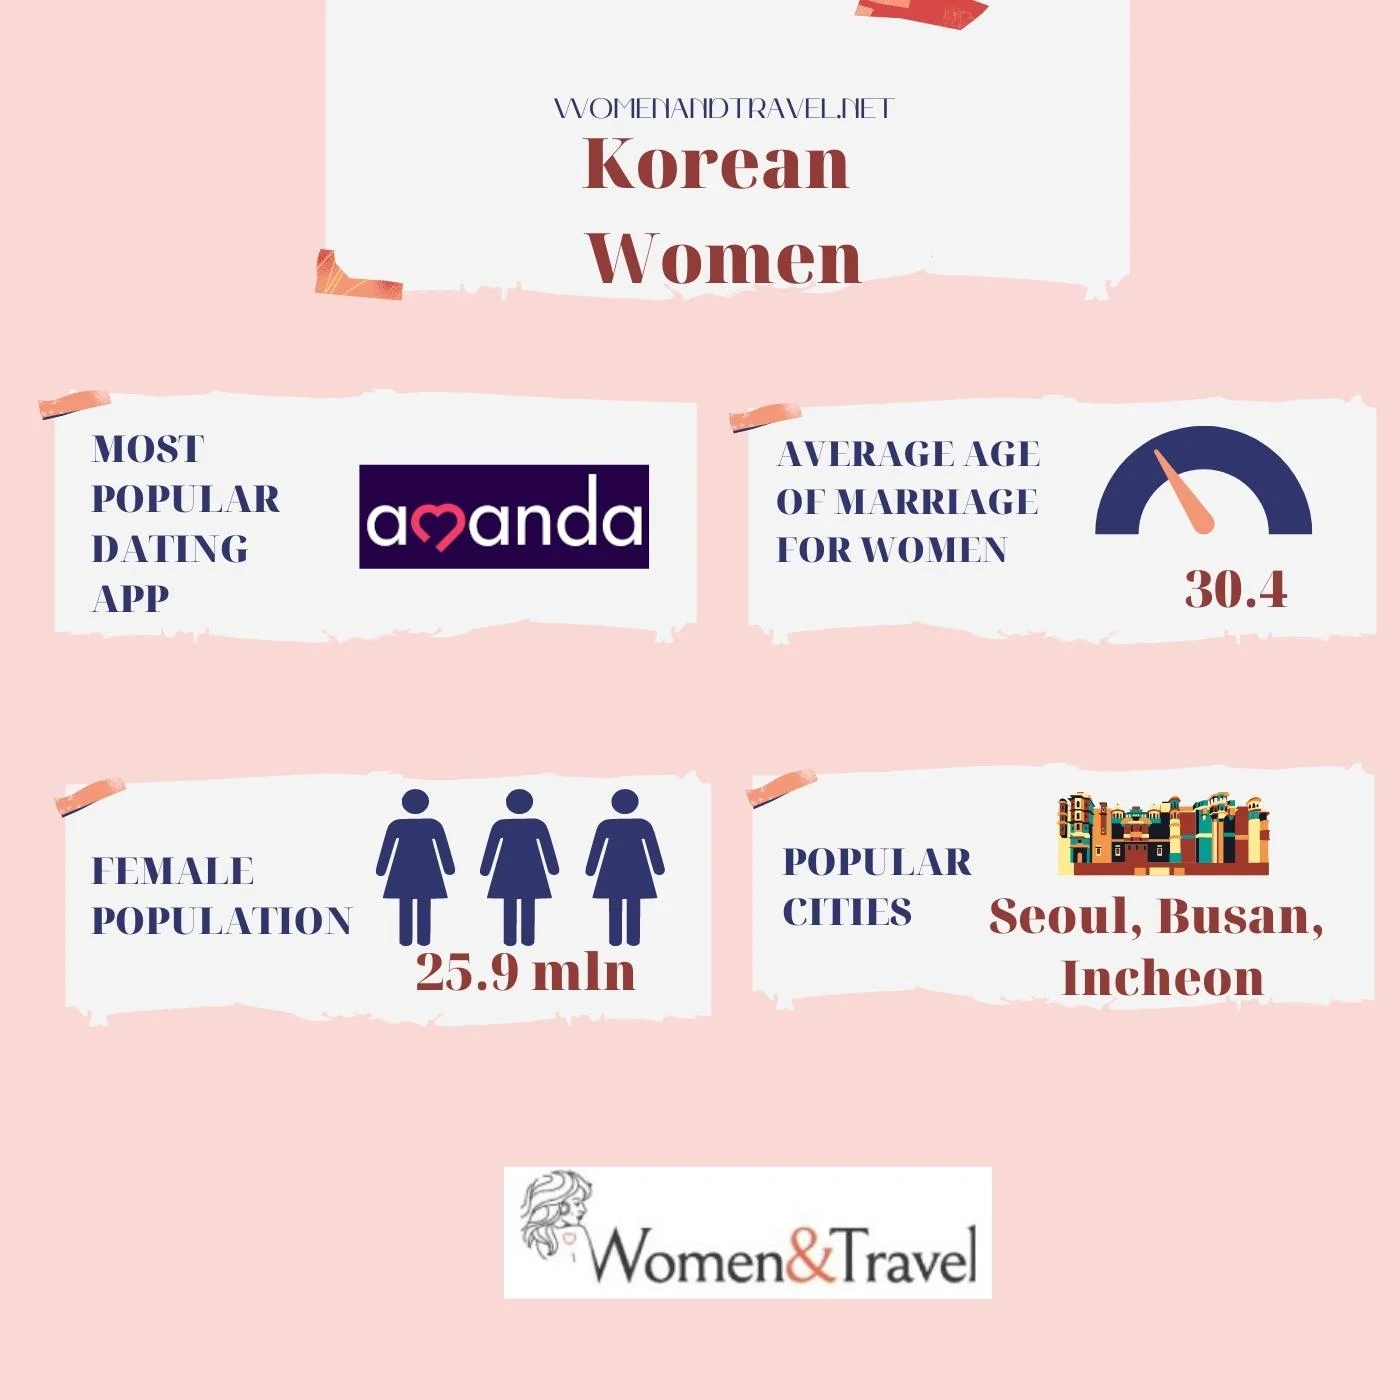 Korean Women infographic